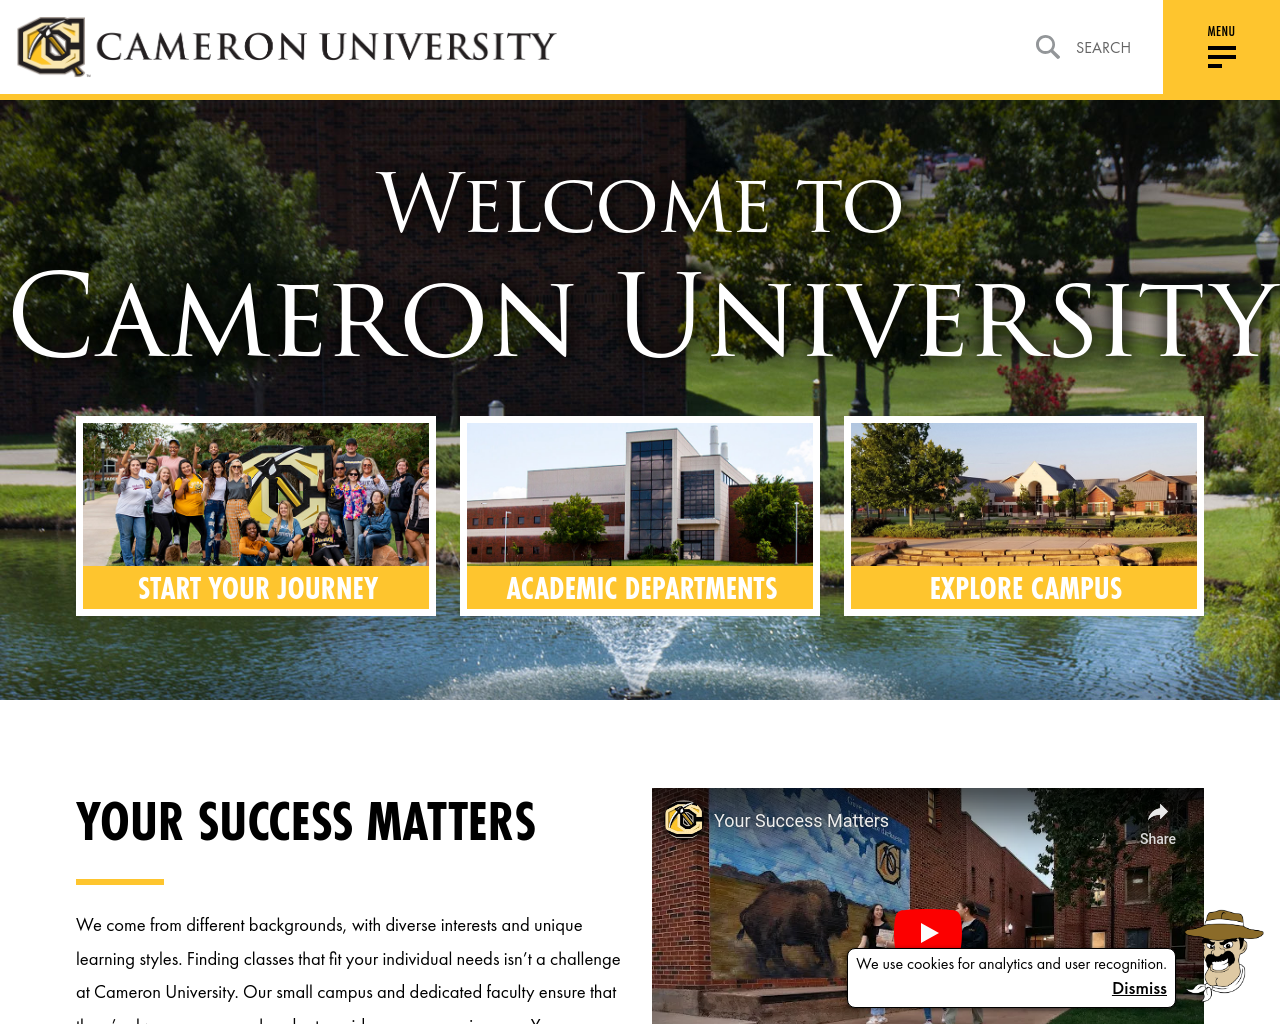 cameron.edu